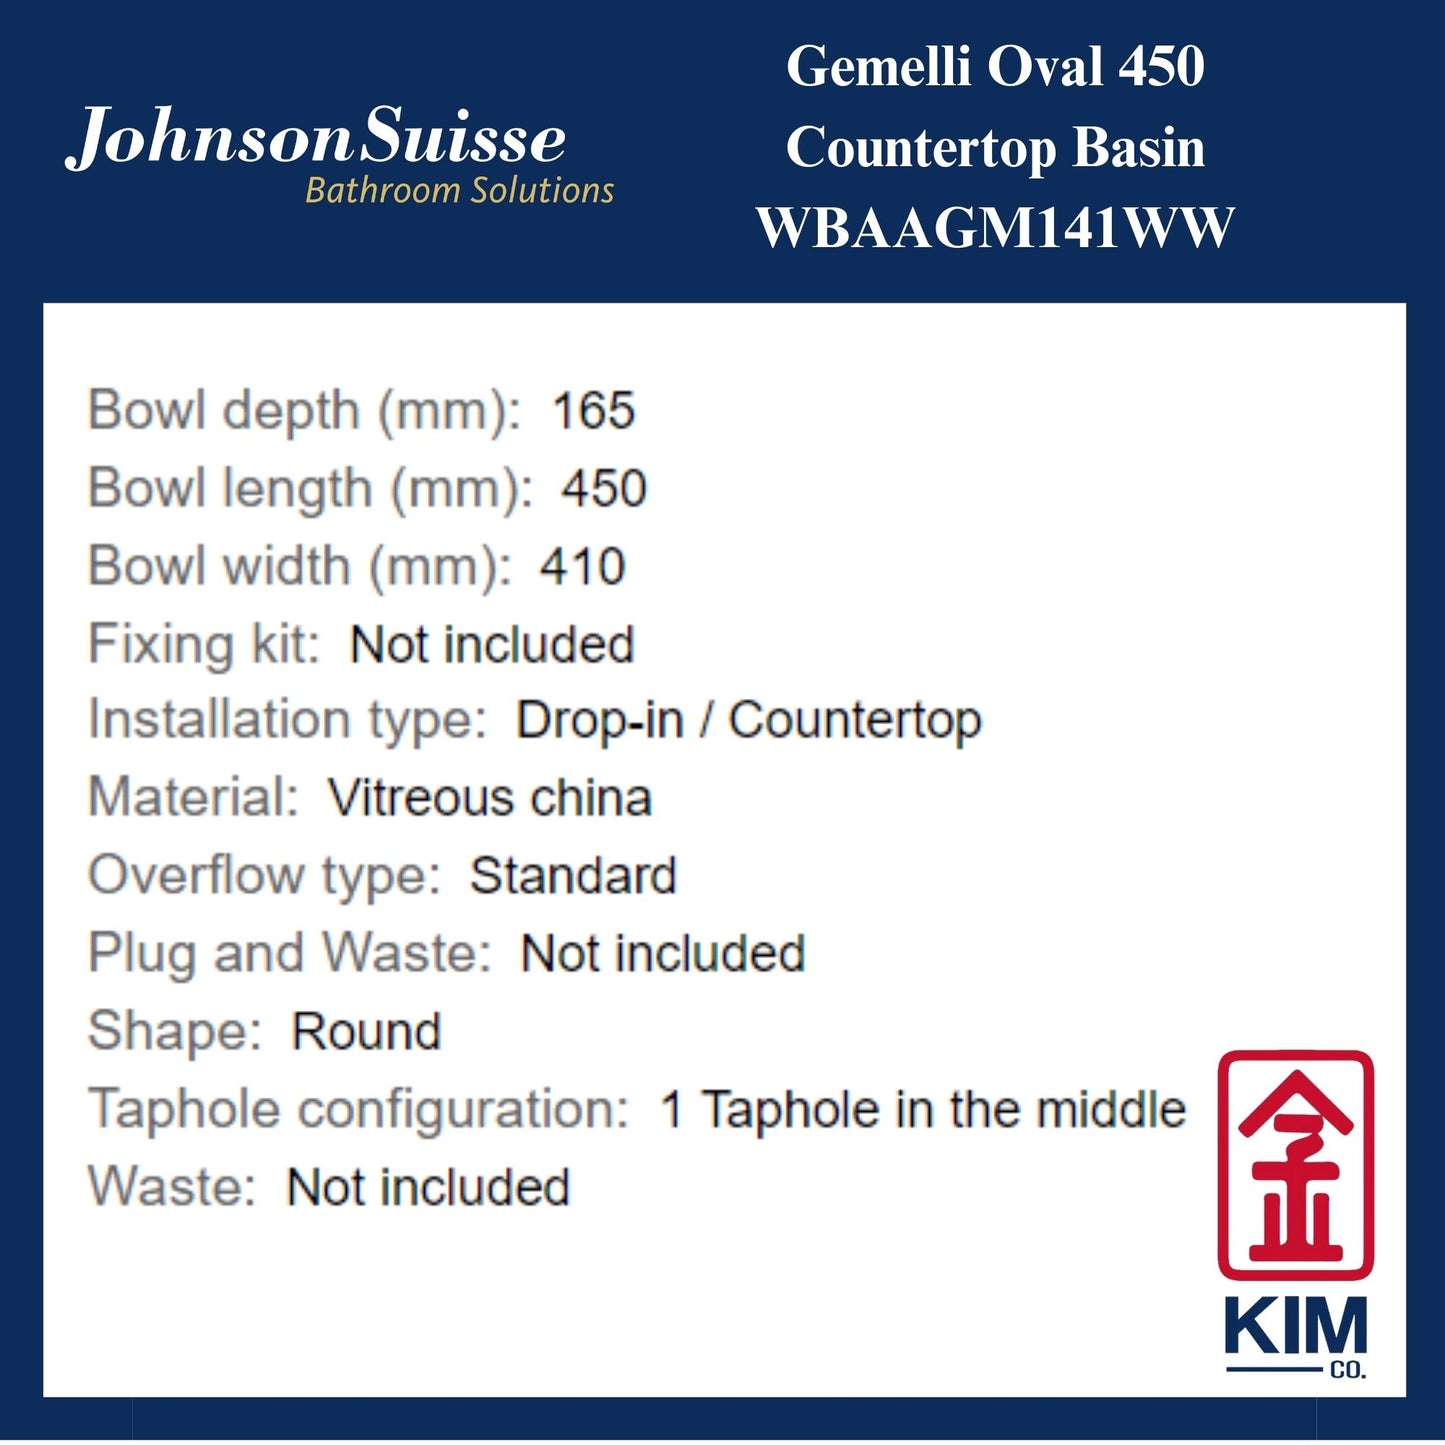 Johnson Suisse Gemelli Oval 450 Countertop Basin (WBAAGM141WW)